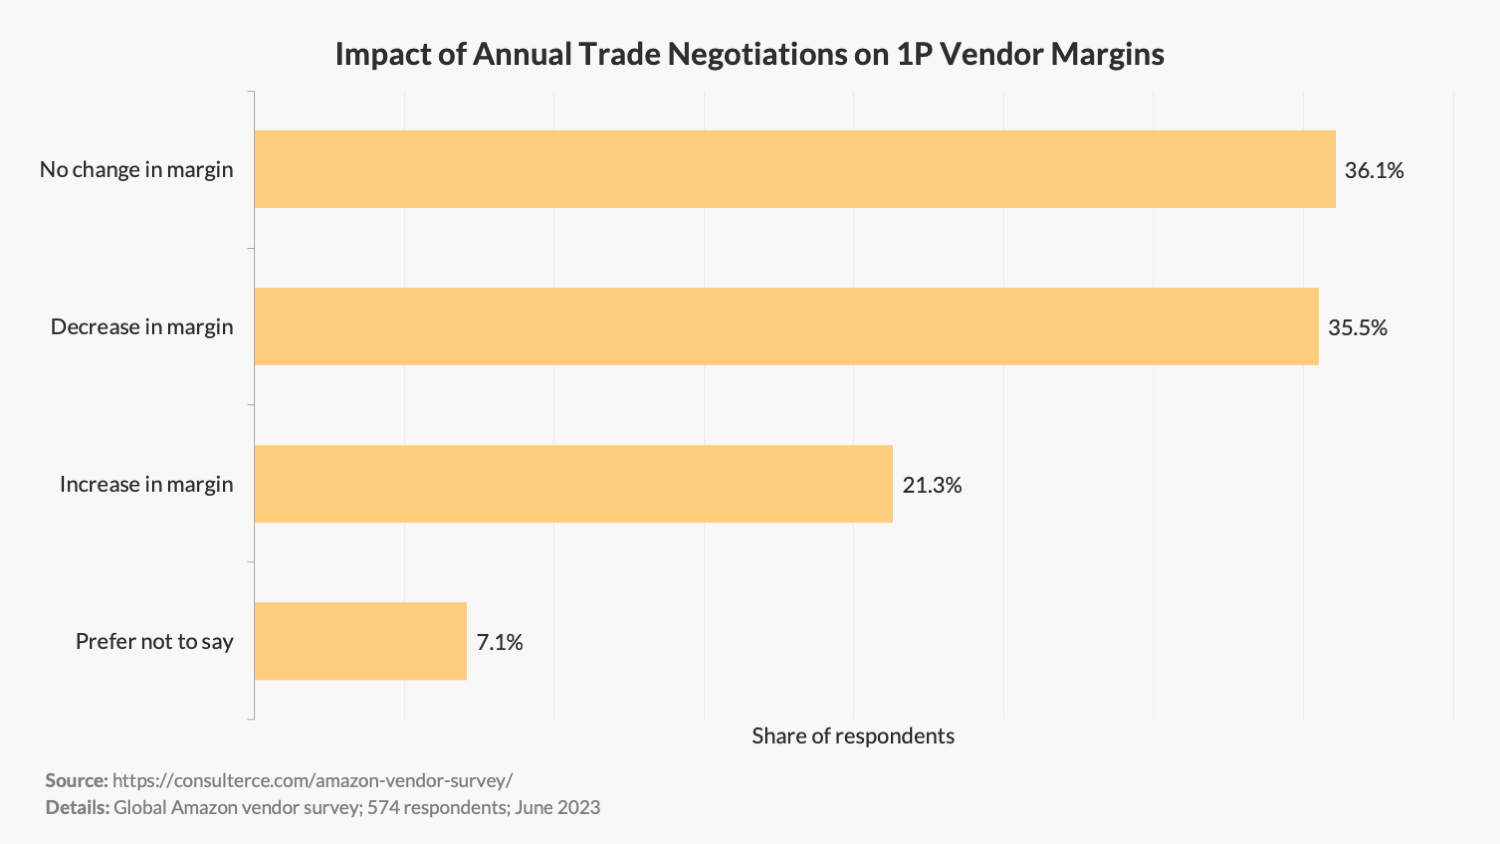 Impact of Annual Vendor Negotiations with Amazon on 1P Vendor Margins